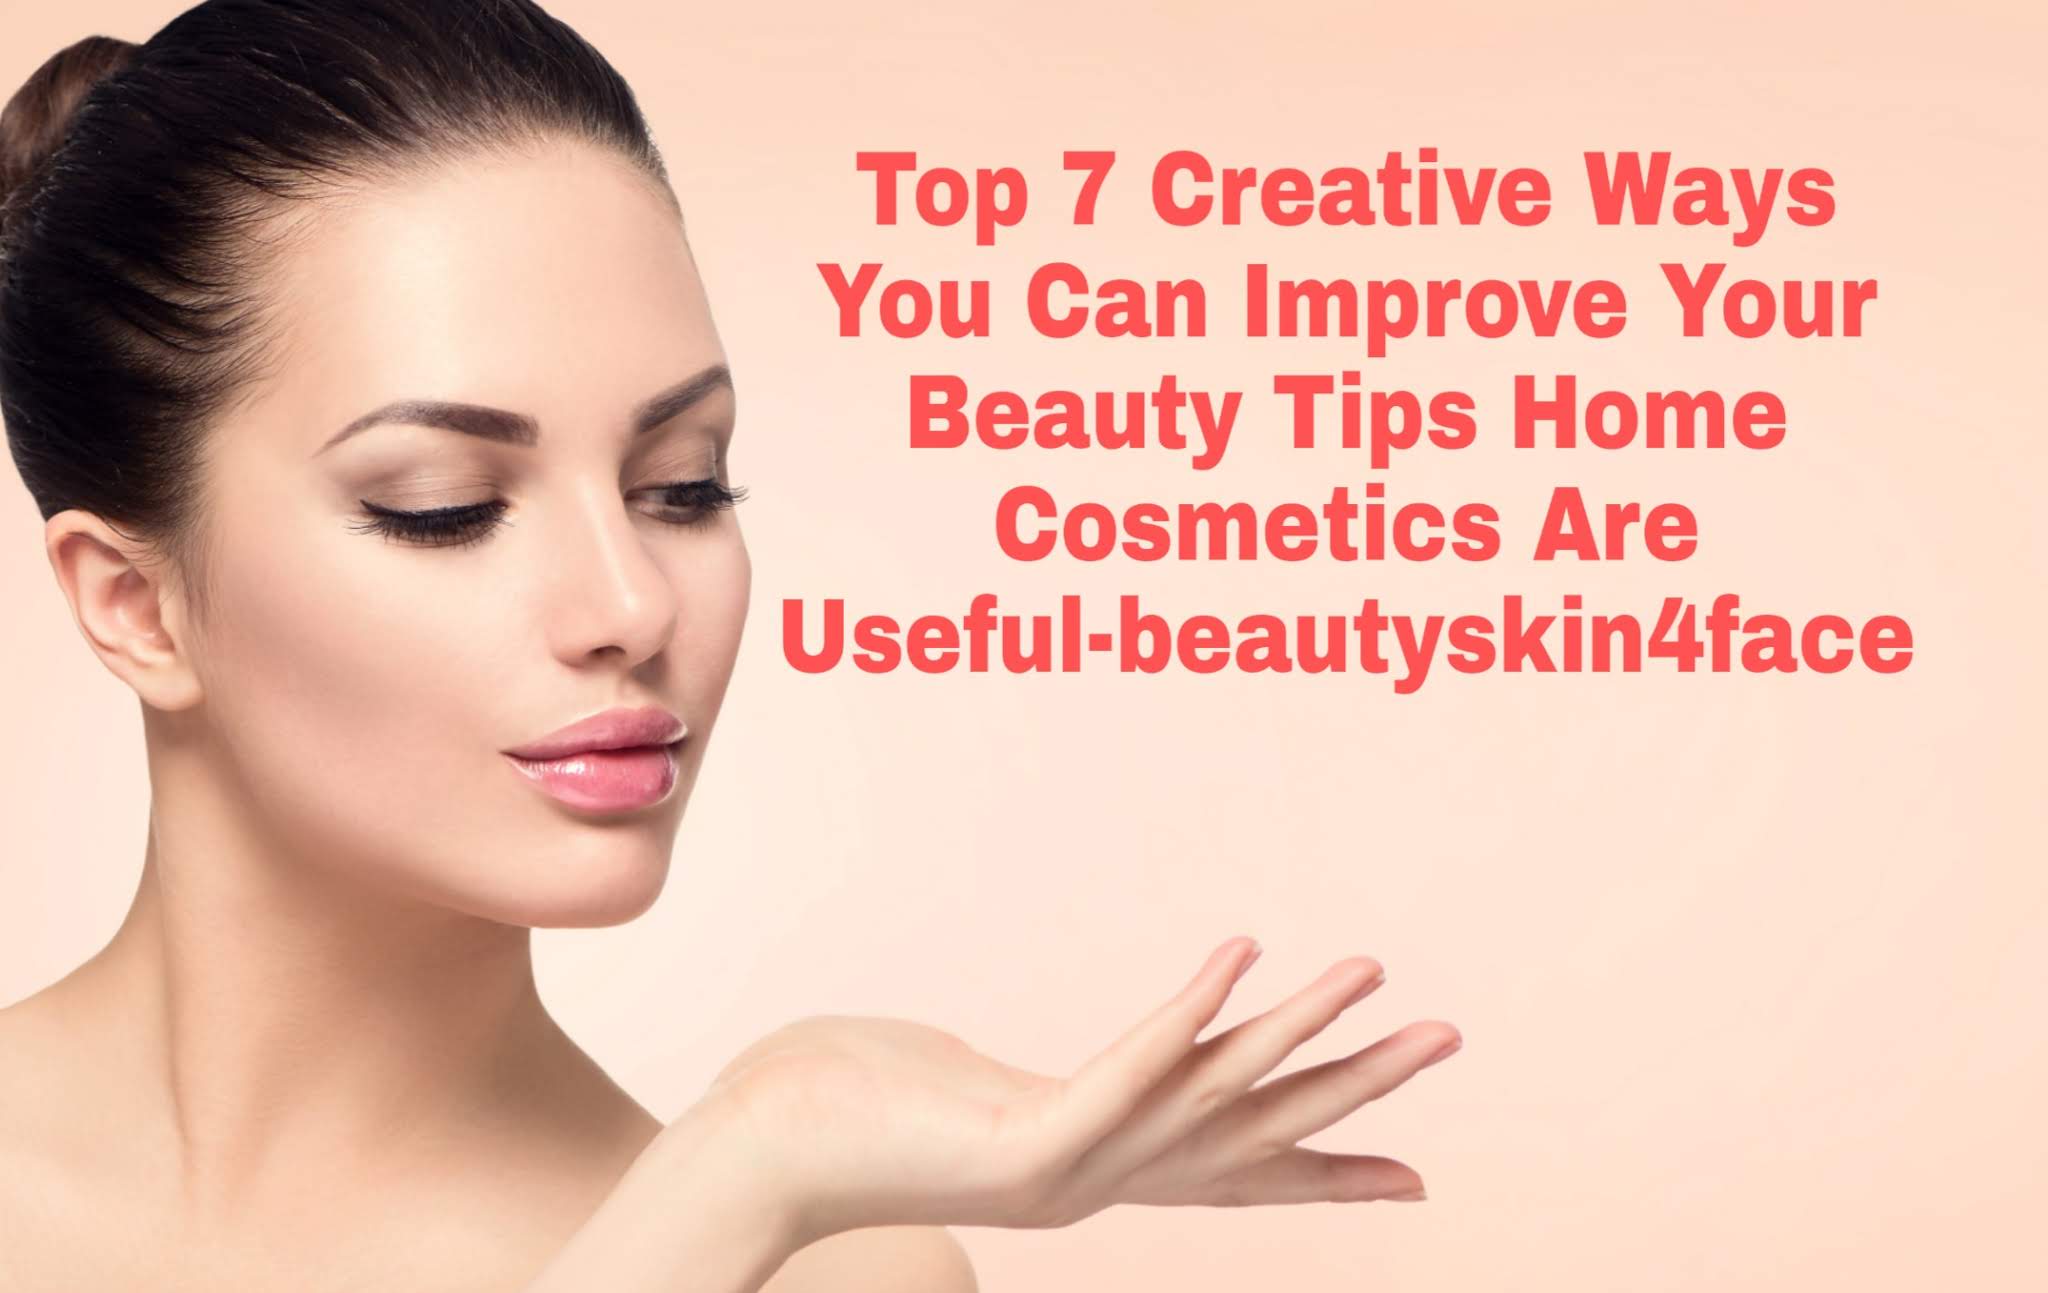 Top 7 Beauty Glowing Skin Creative Ways